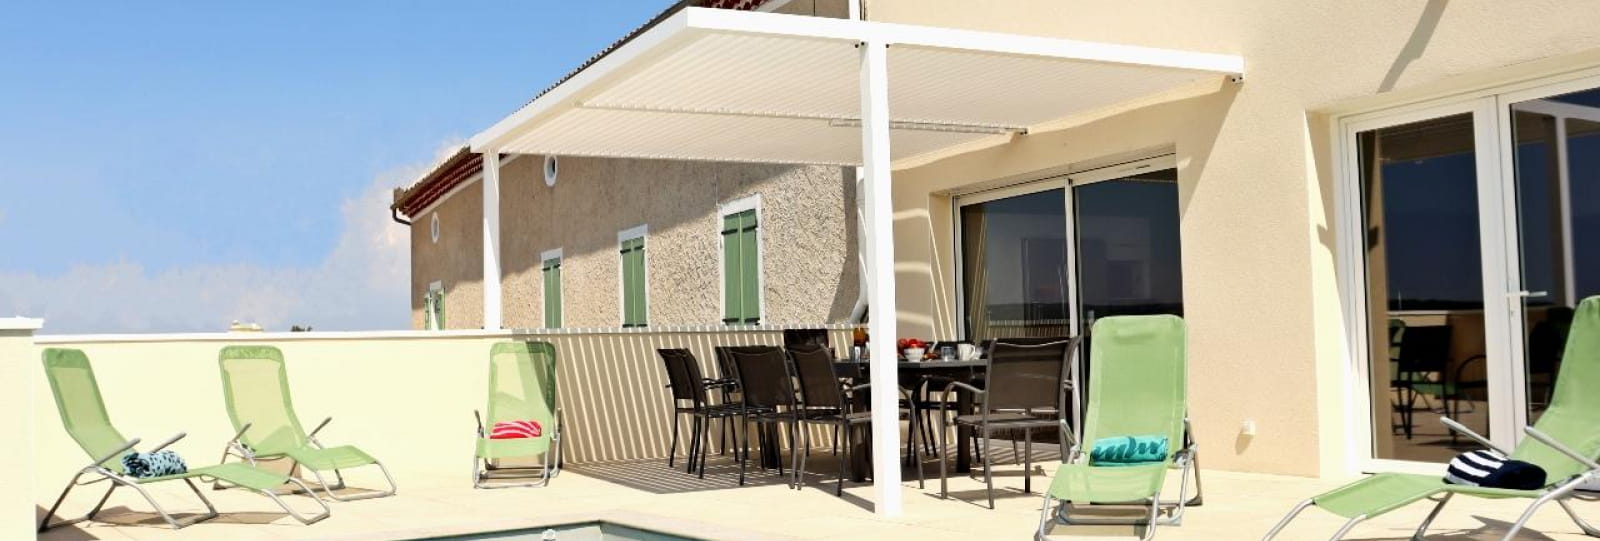 Terrasse et piscine privative, avec bains de soleil, pergola et barbecue plancha